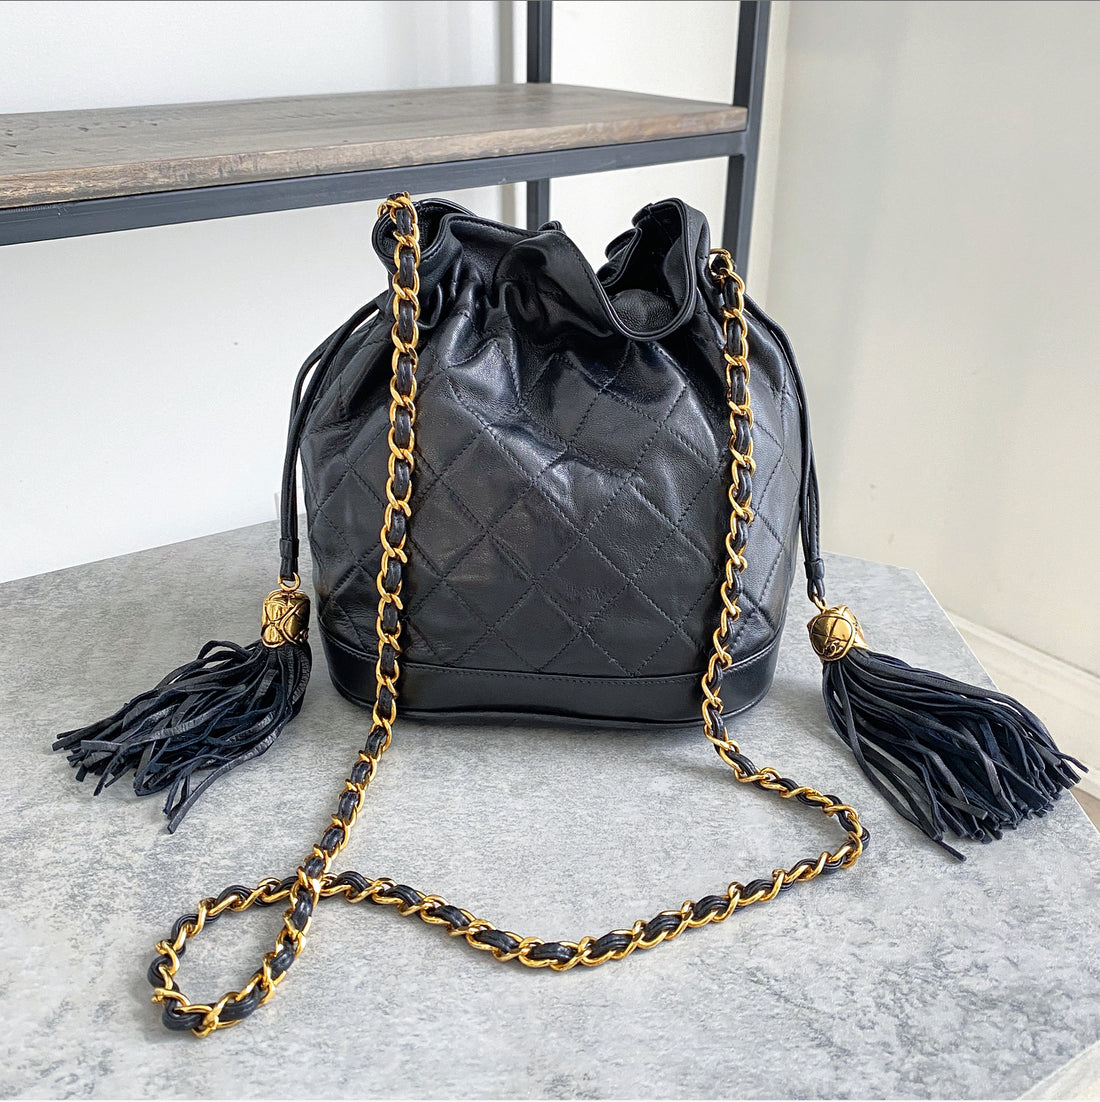 Chanel Black Lambskin Mini Bucket Bag